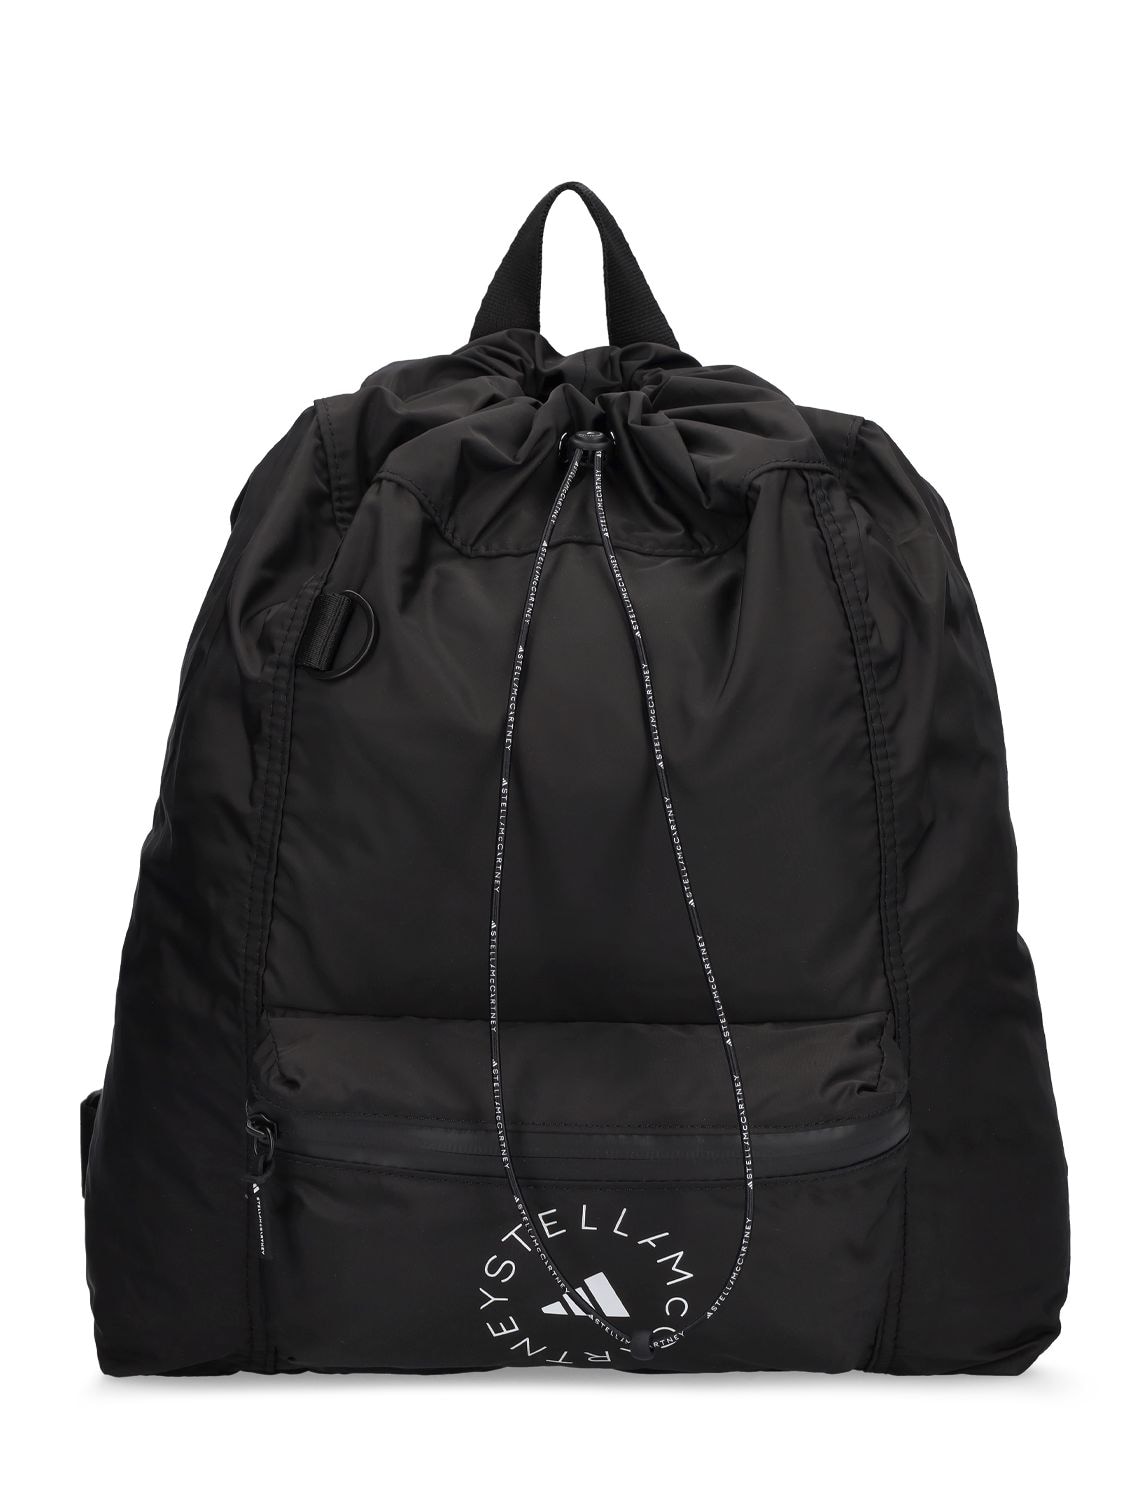 Asmc Gym Sack Backpack image